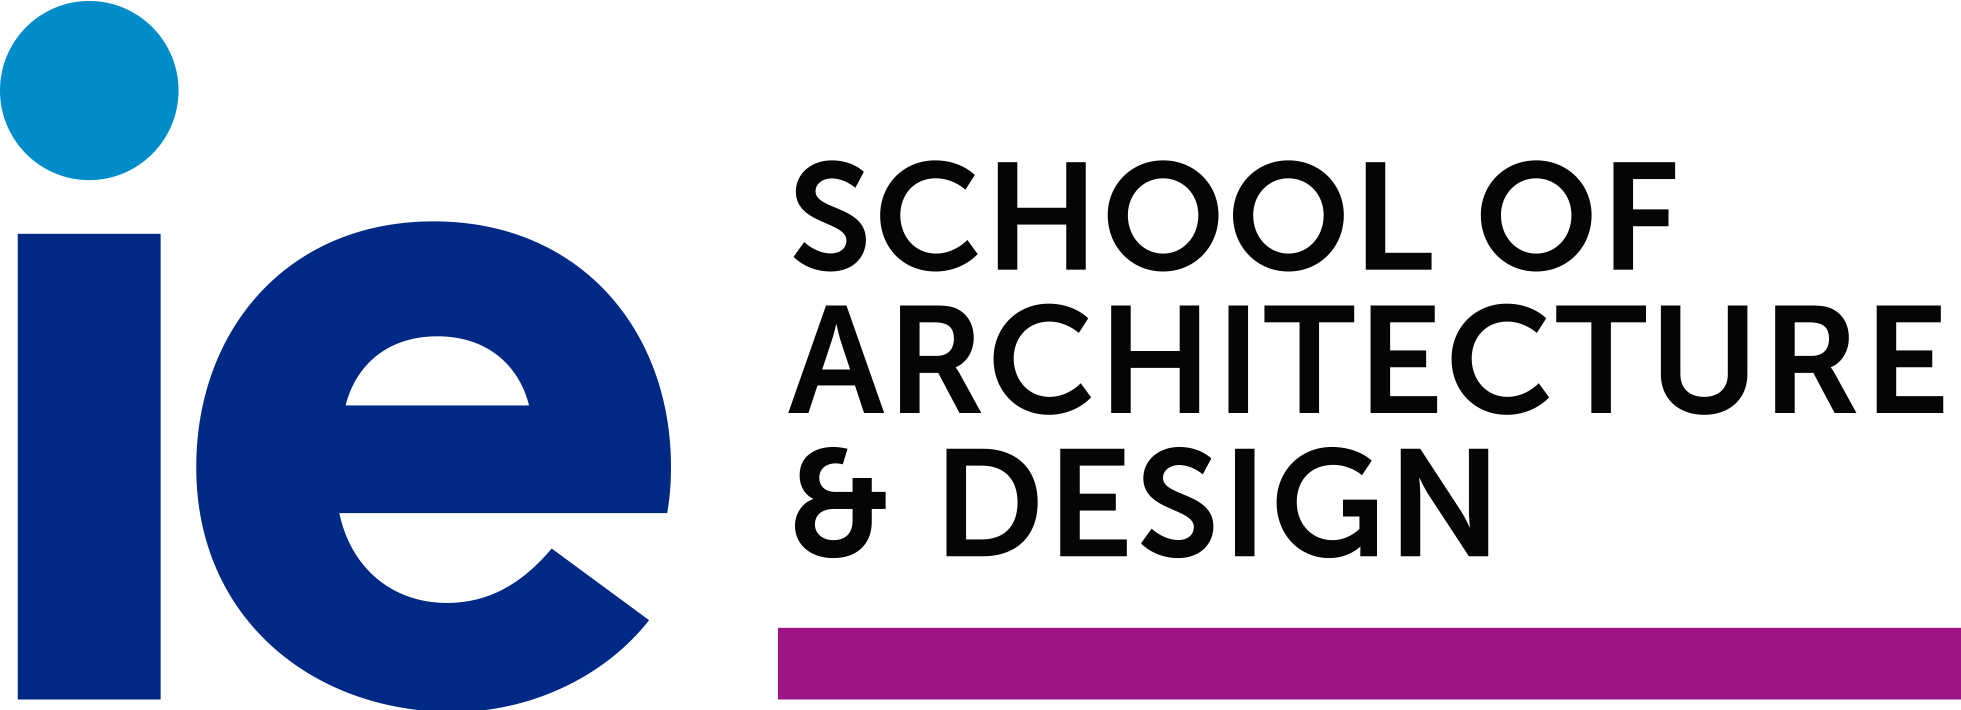 School of architecture and design